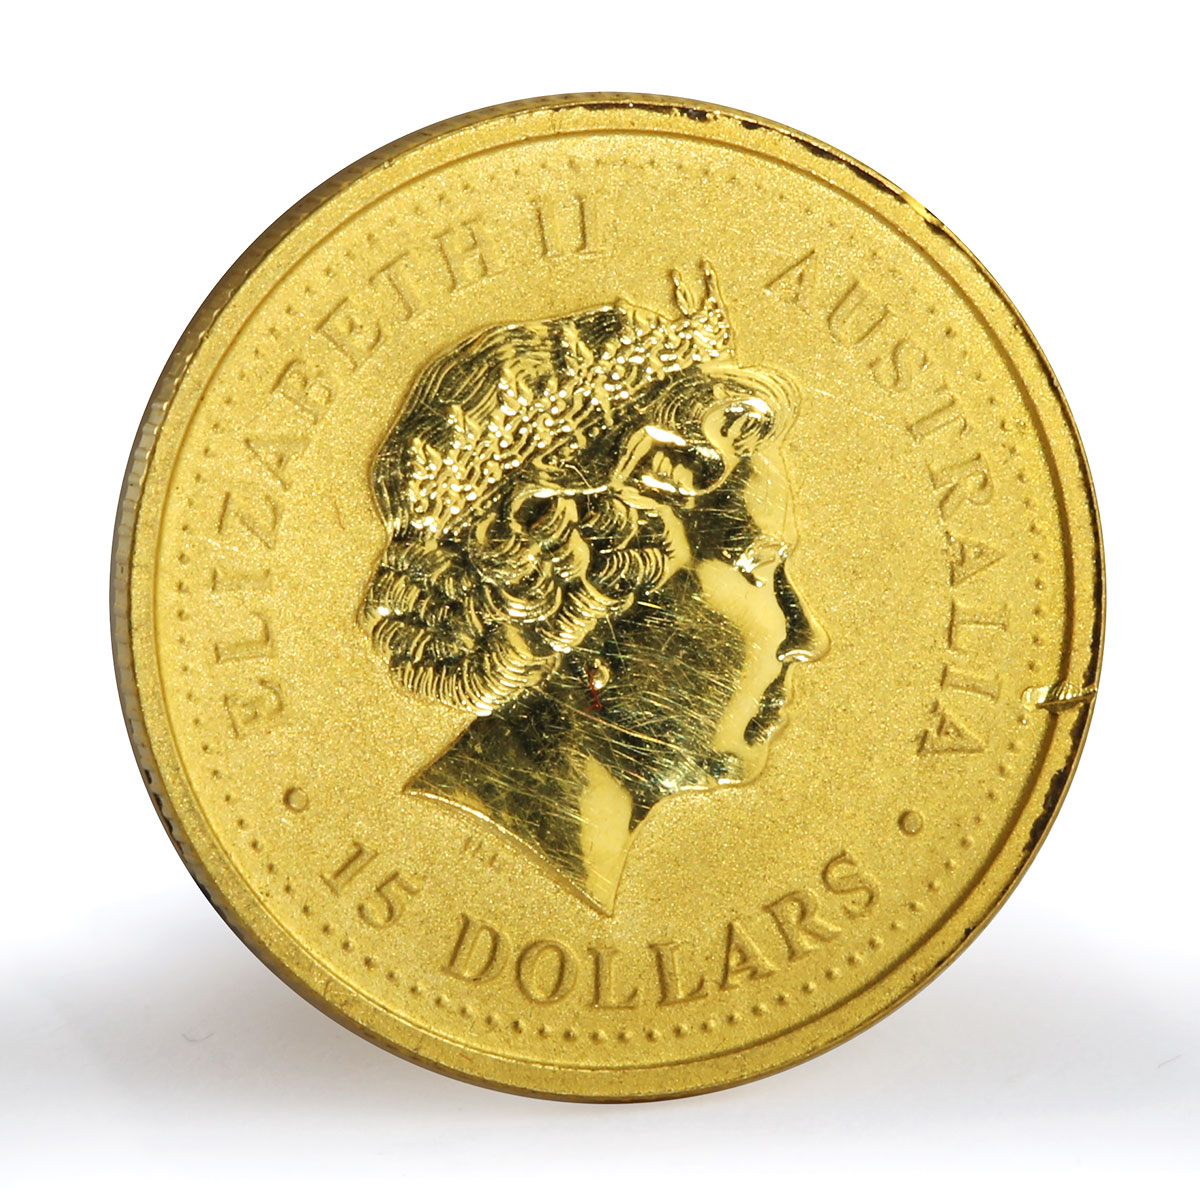 Australia 15 dollars Lunar calendar Year of Rooster gold coin 1/10 oz